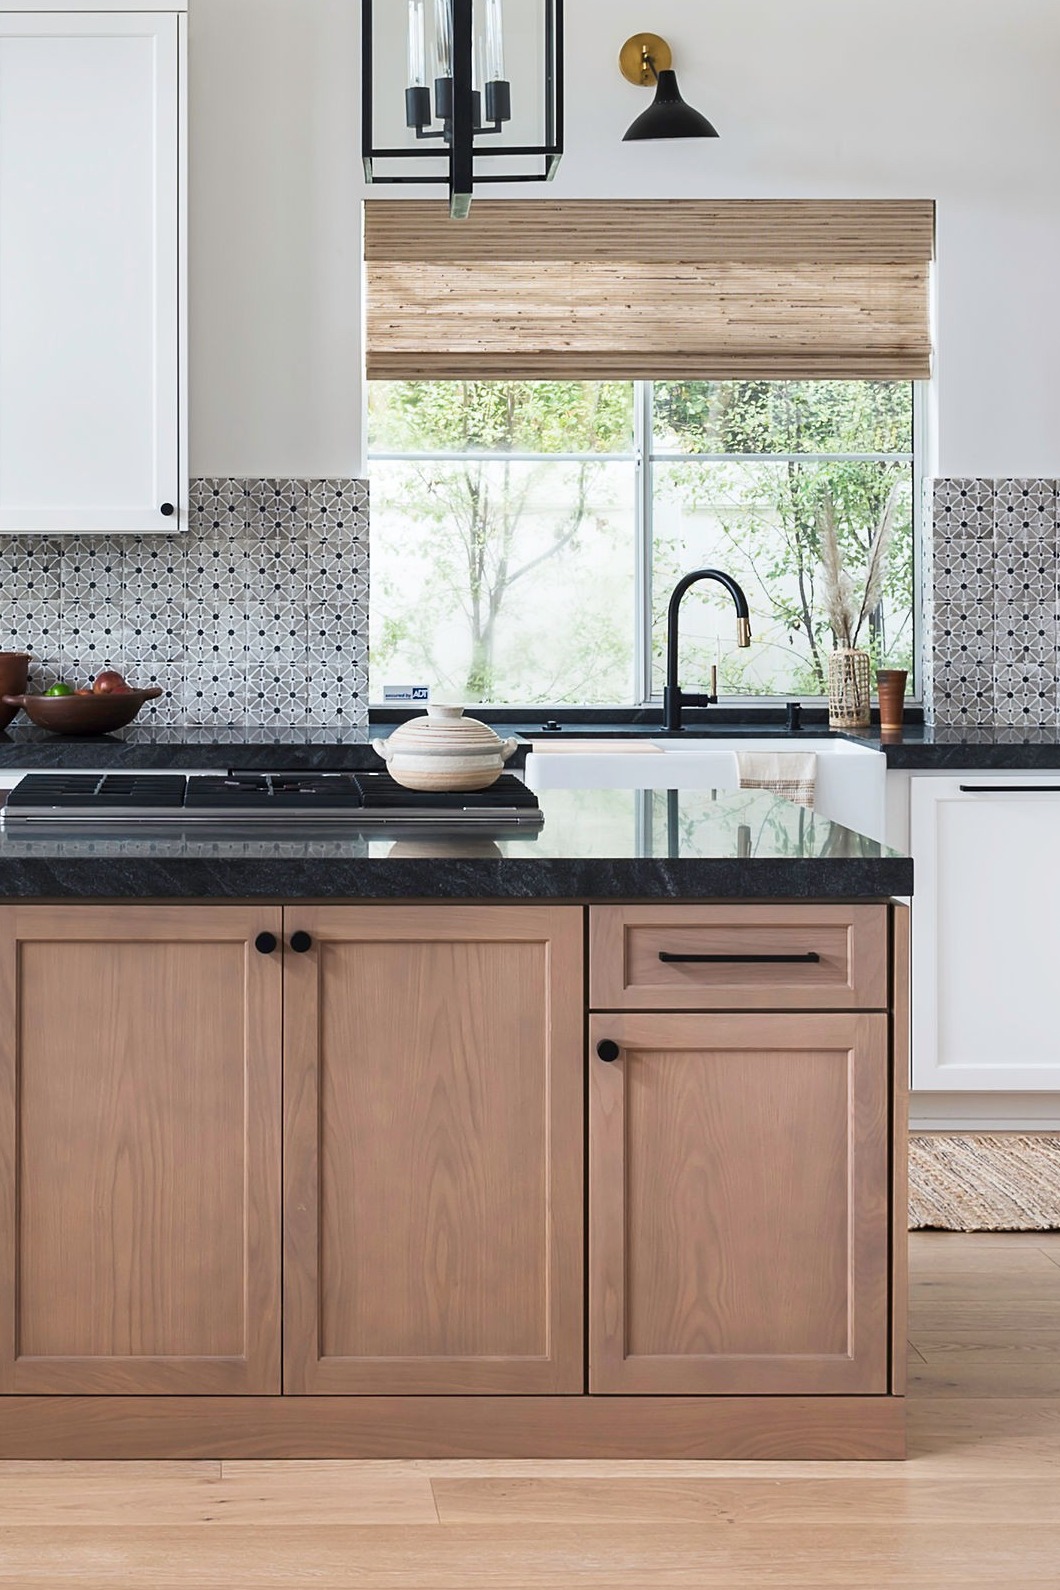 Black Granite Countertop Taupe Island White Kitchen Cabinet Motif Tile Backsplash Light Wood Floor